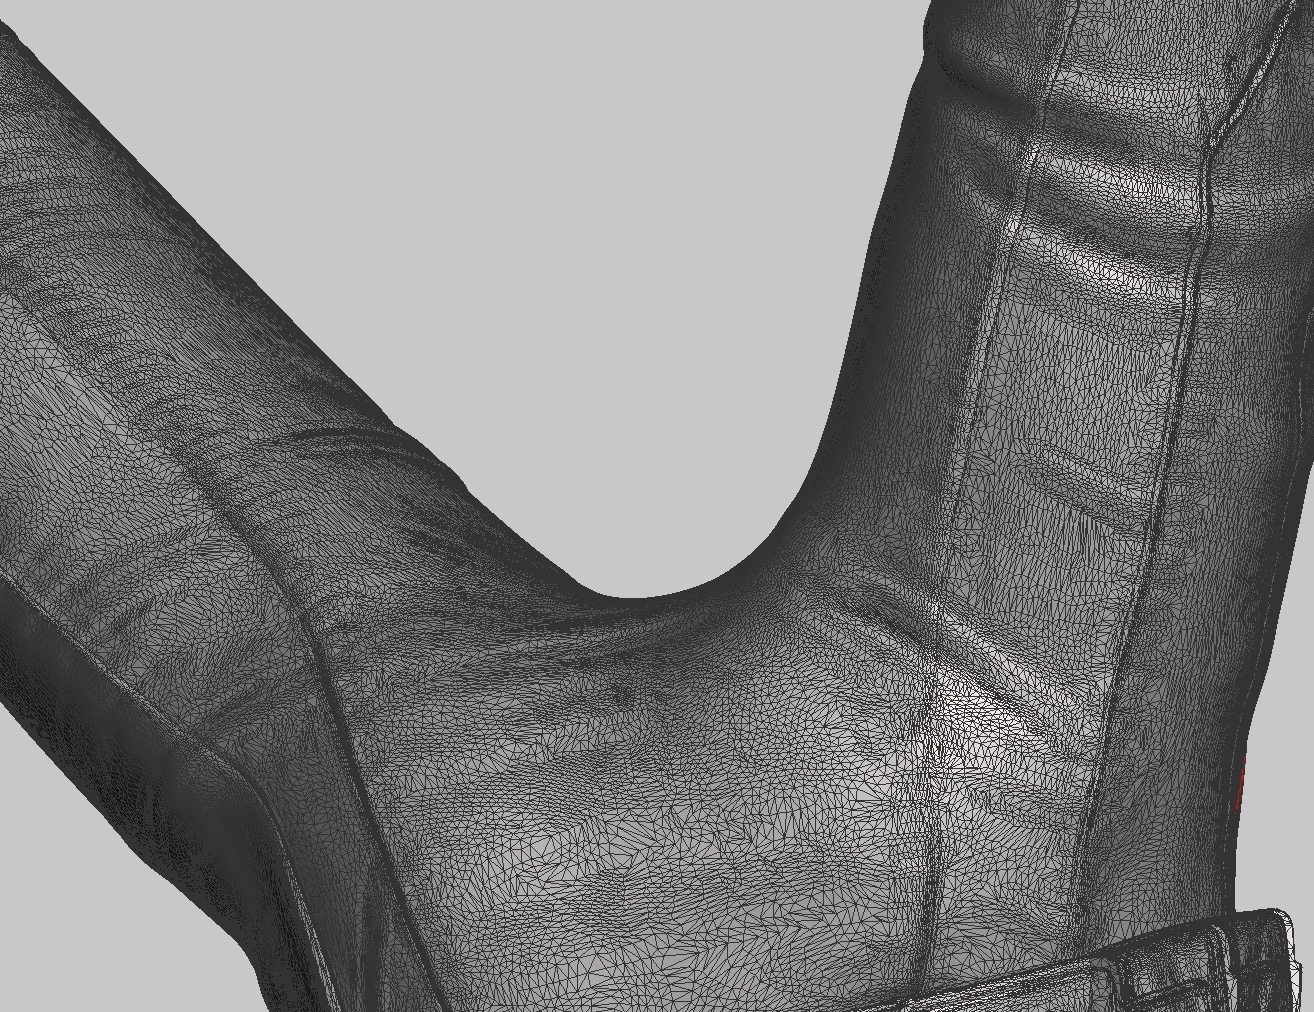  Captain America's pants 3D model segment by LayerTrove 